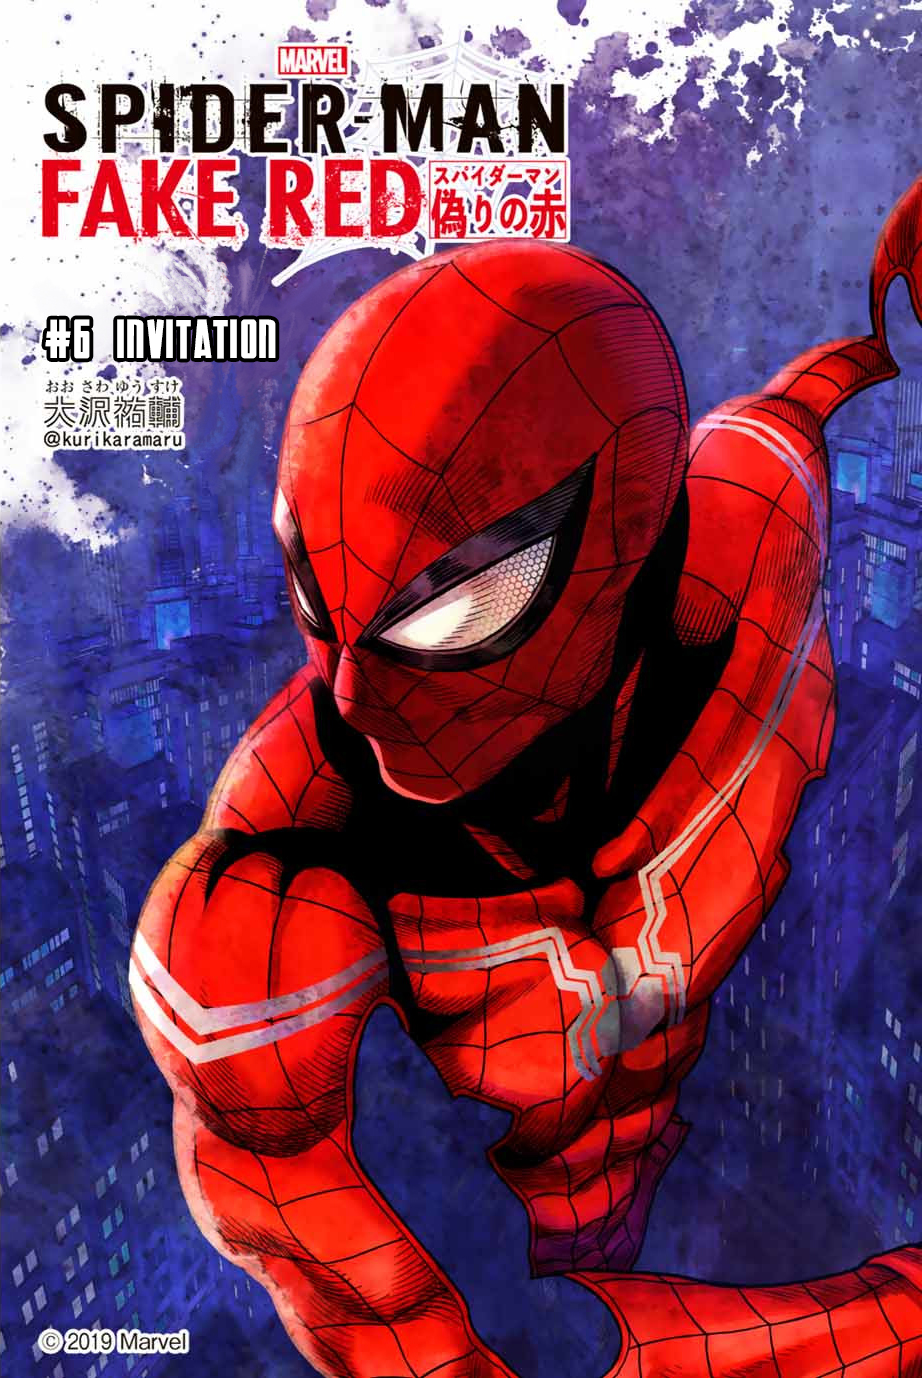 Spider-Man: Fake Red Vol 1 6 | Marvel Database | Fandom